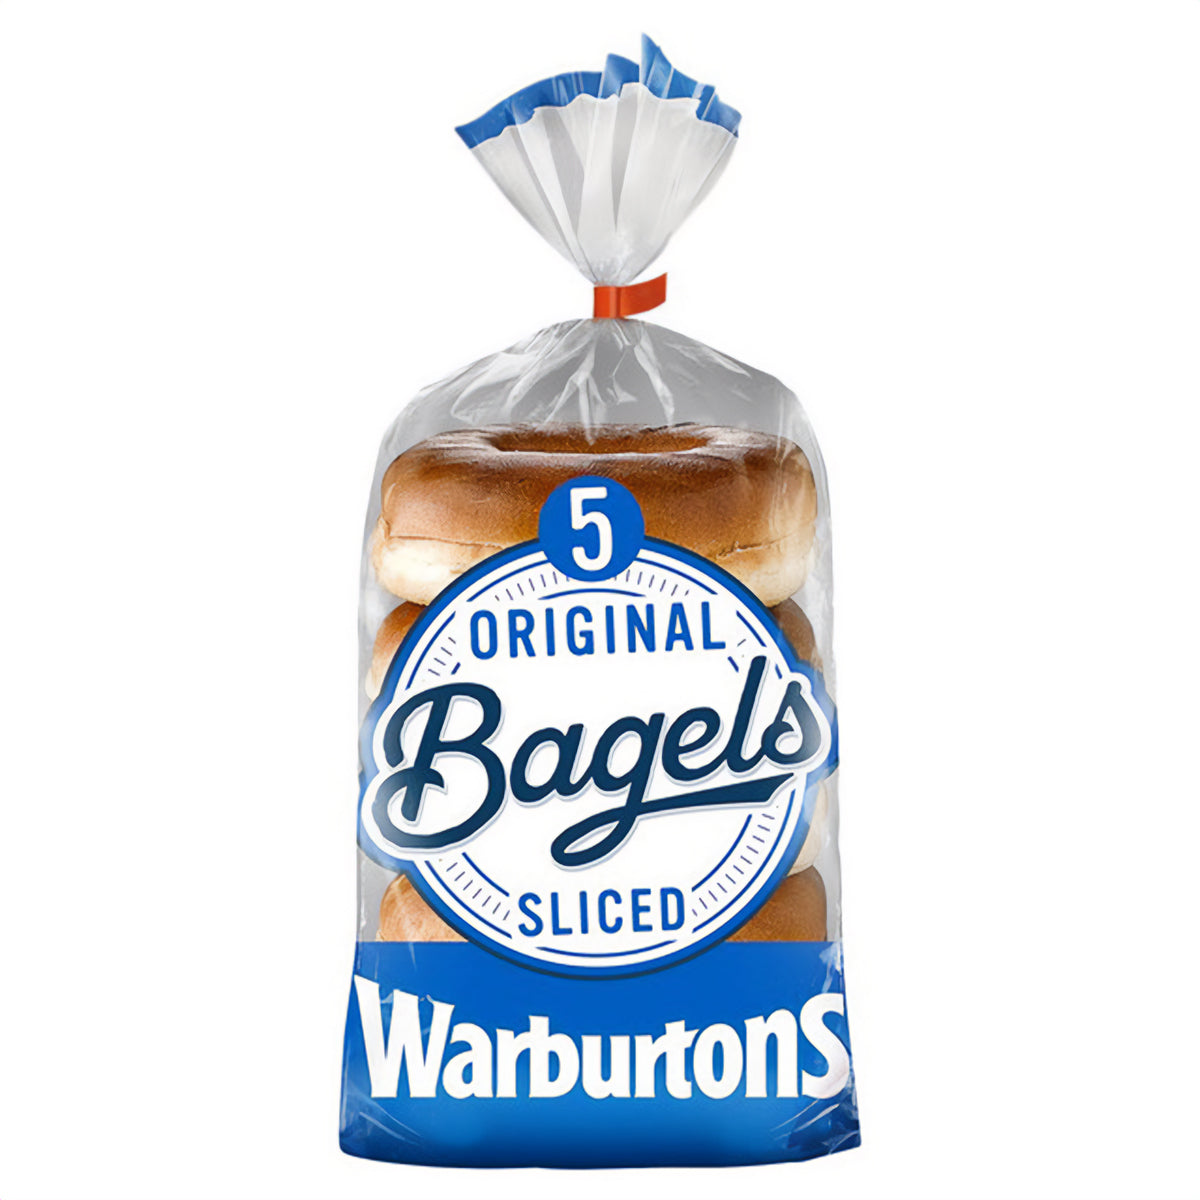 A bag of Warburtons - Bagels - 5 Original sliced on a white background.